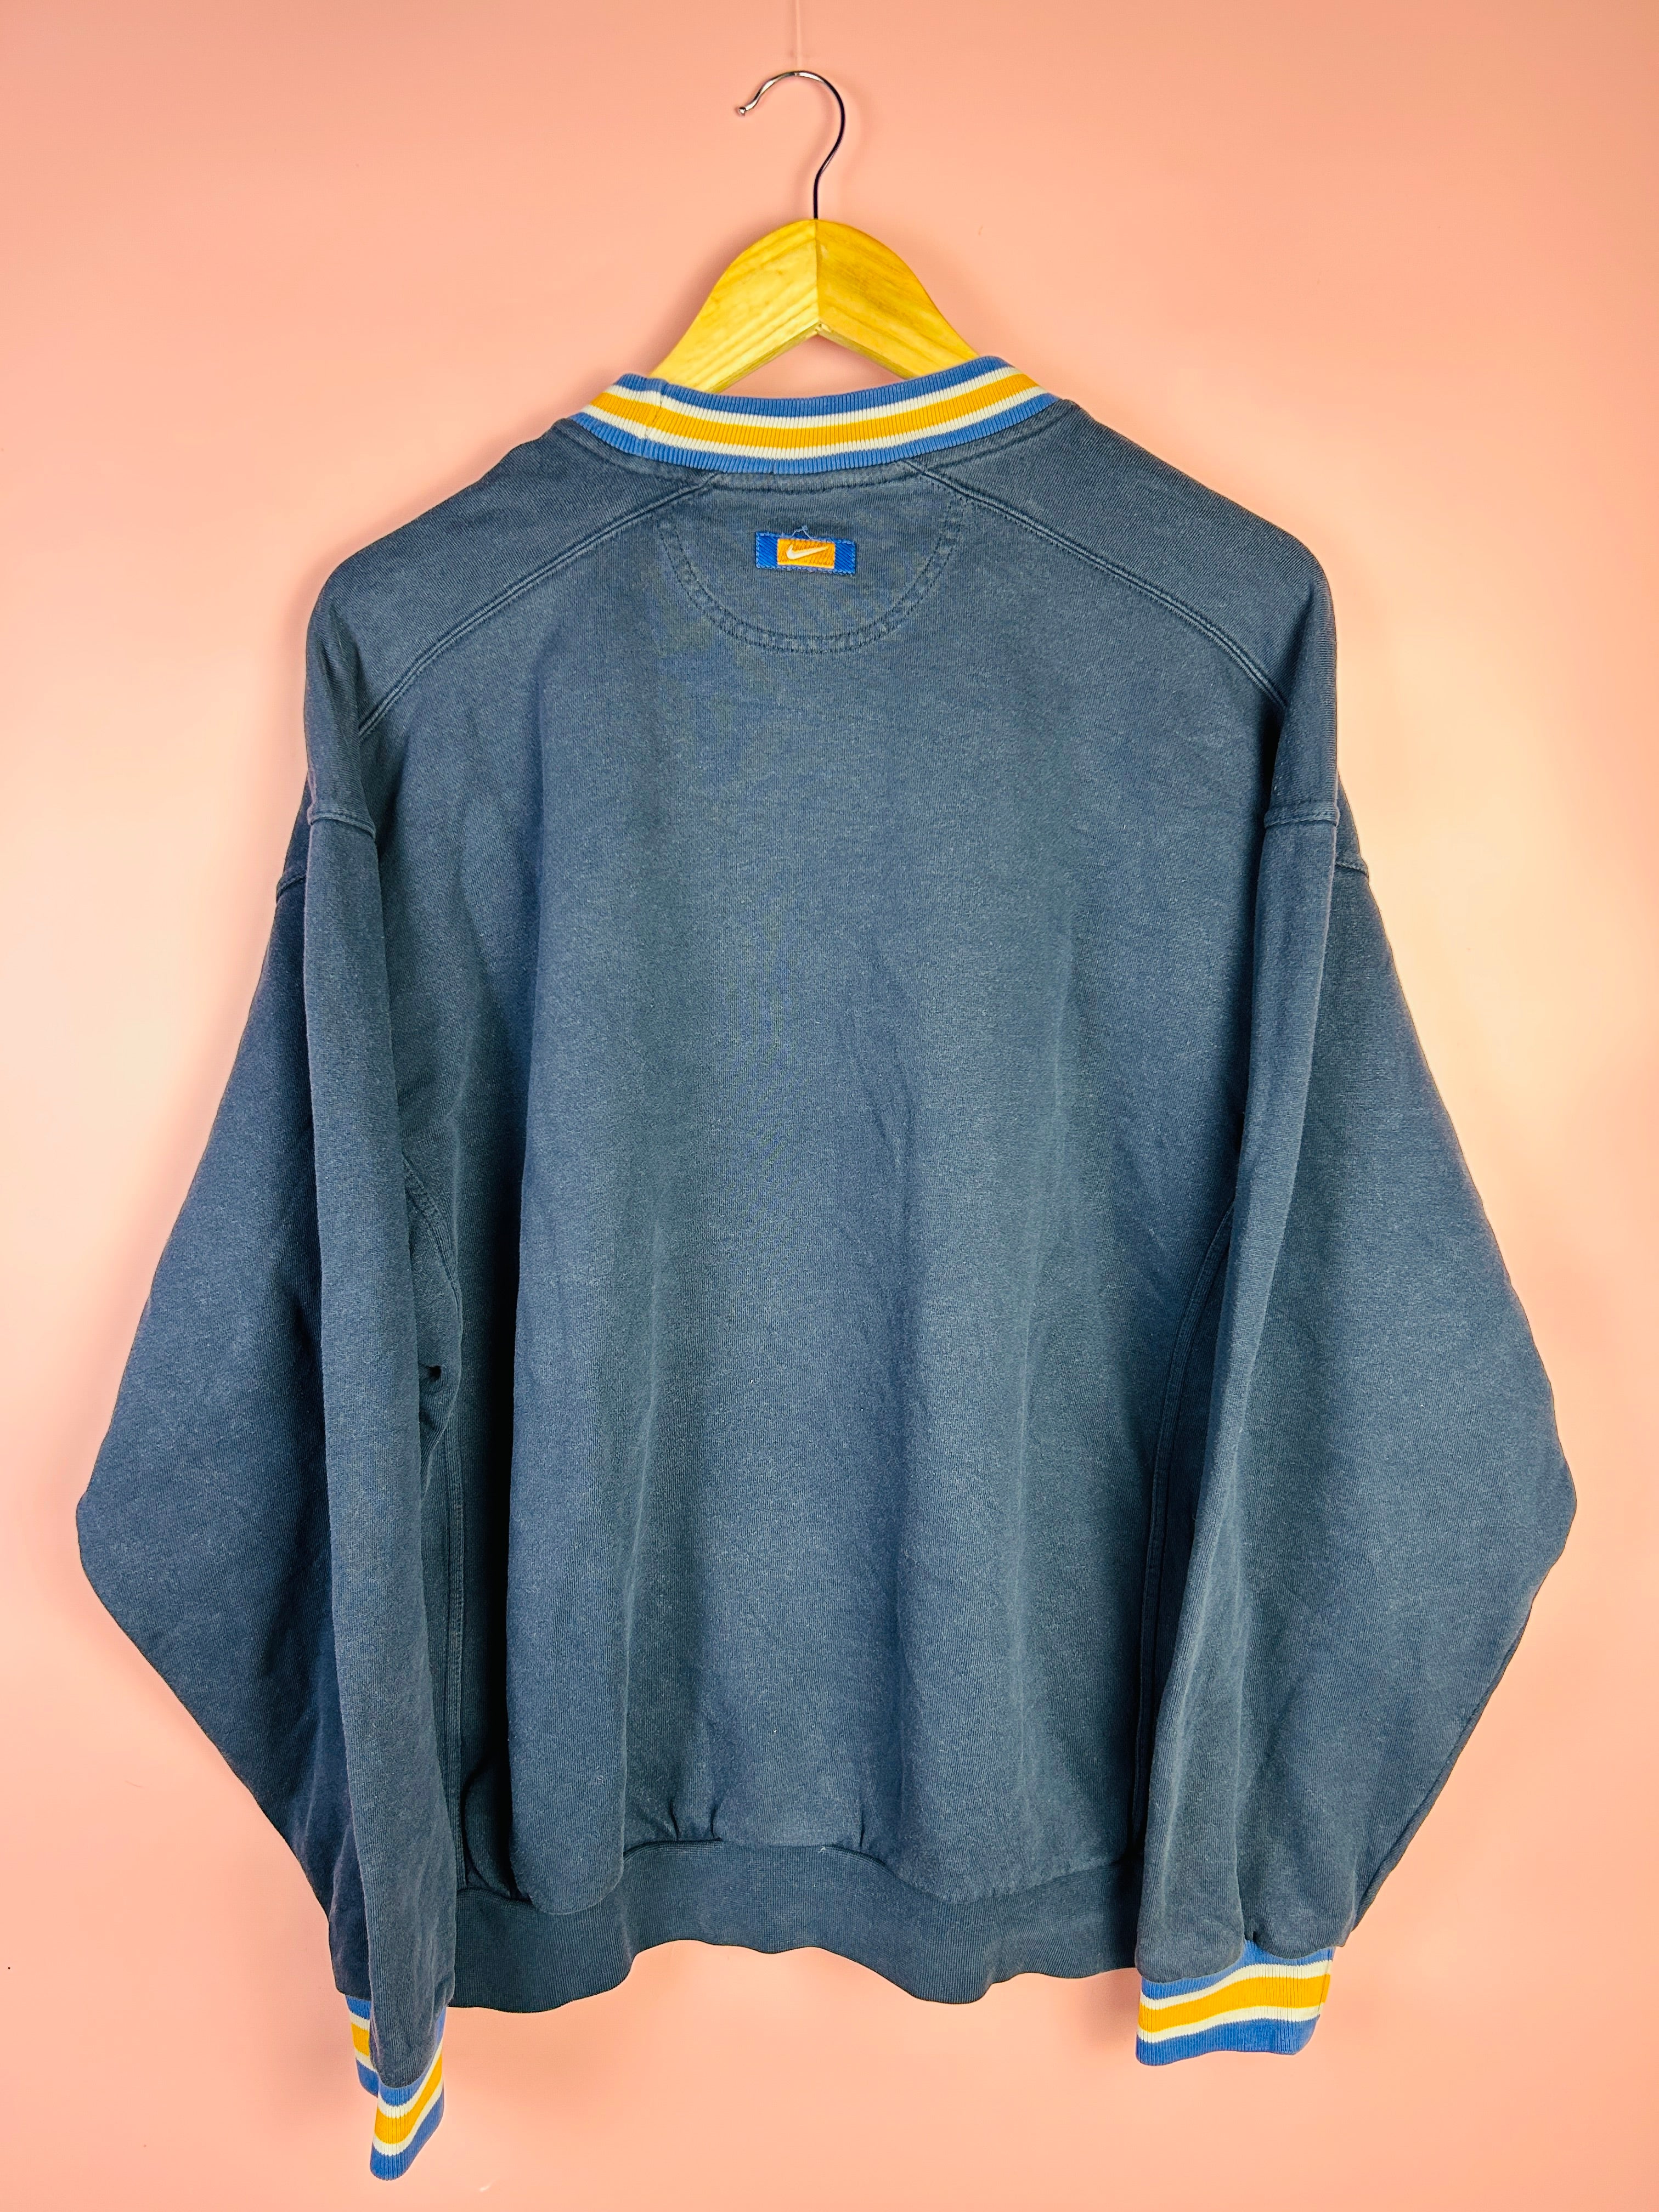 M-L Vintage Nike Sweater